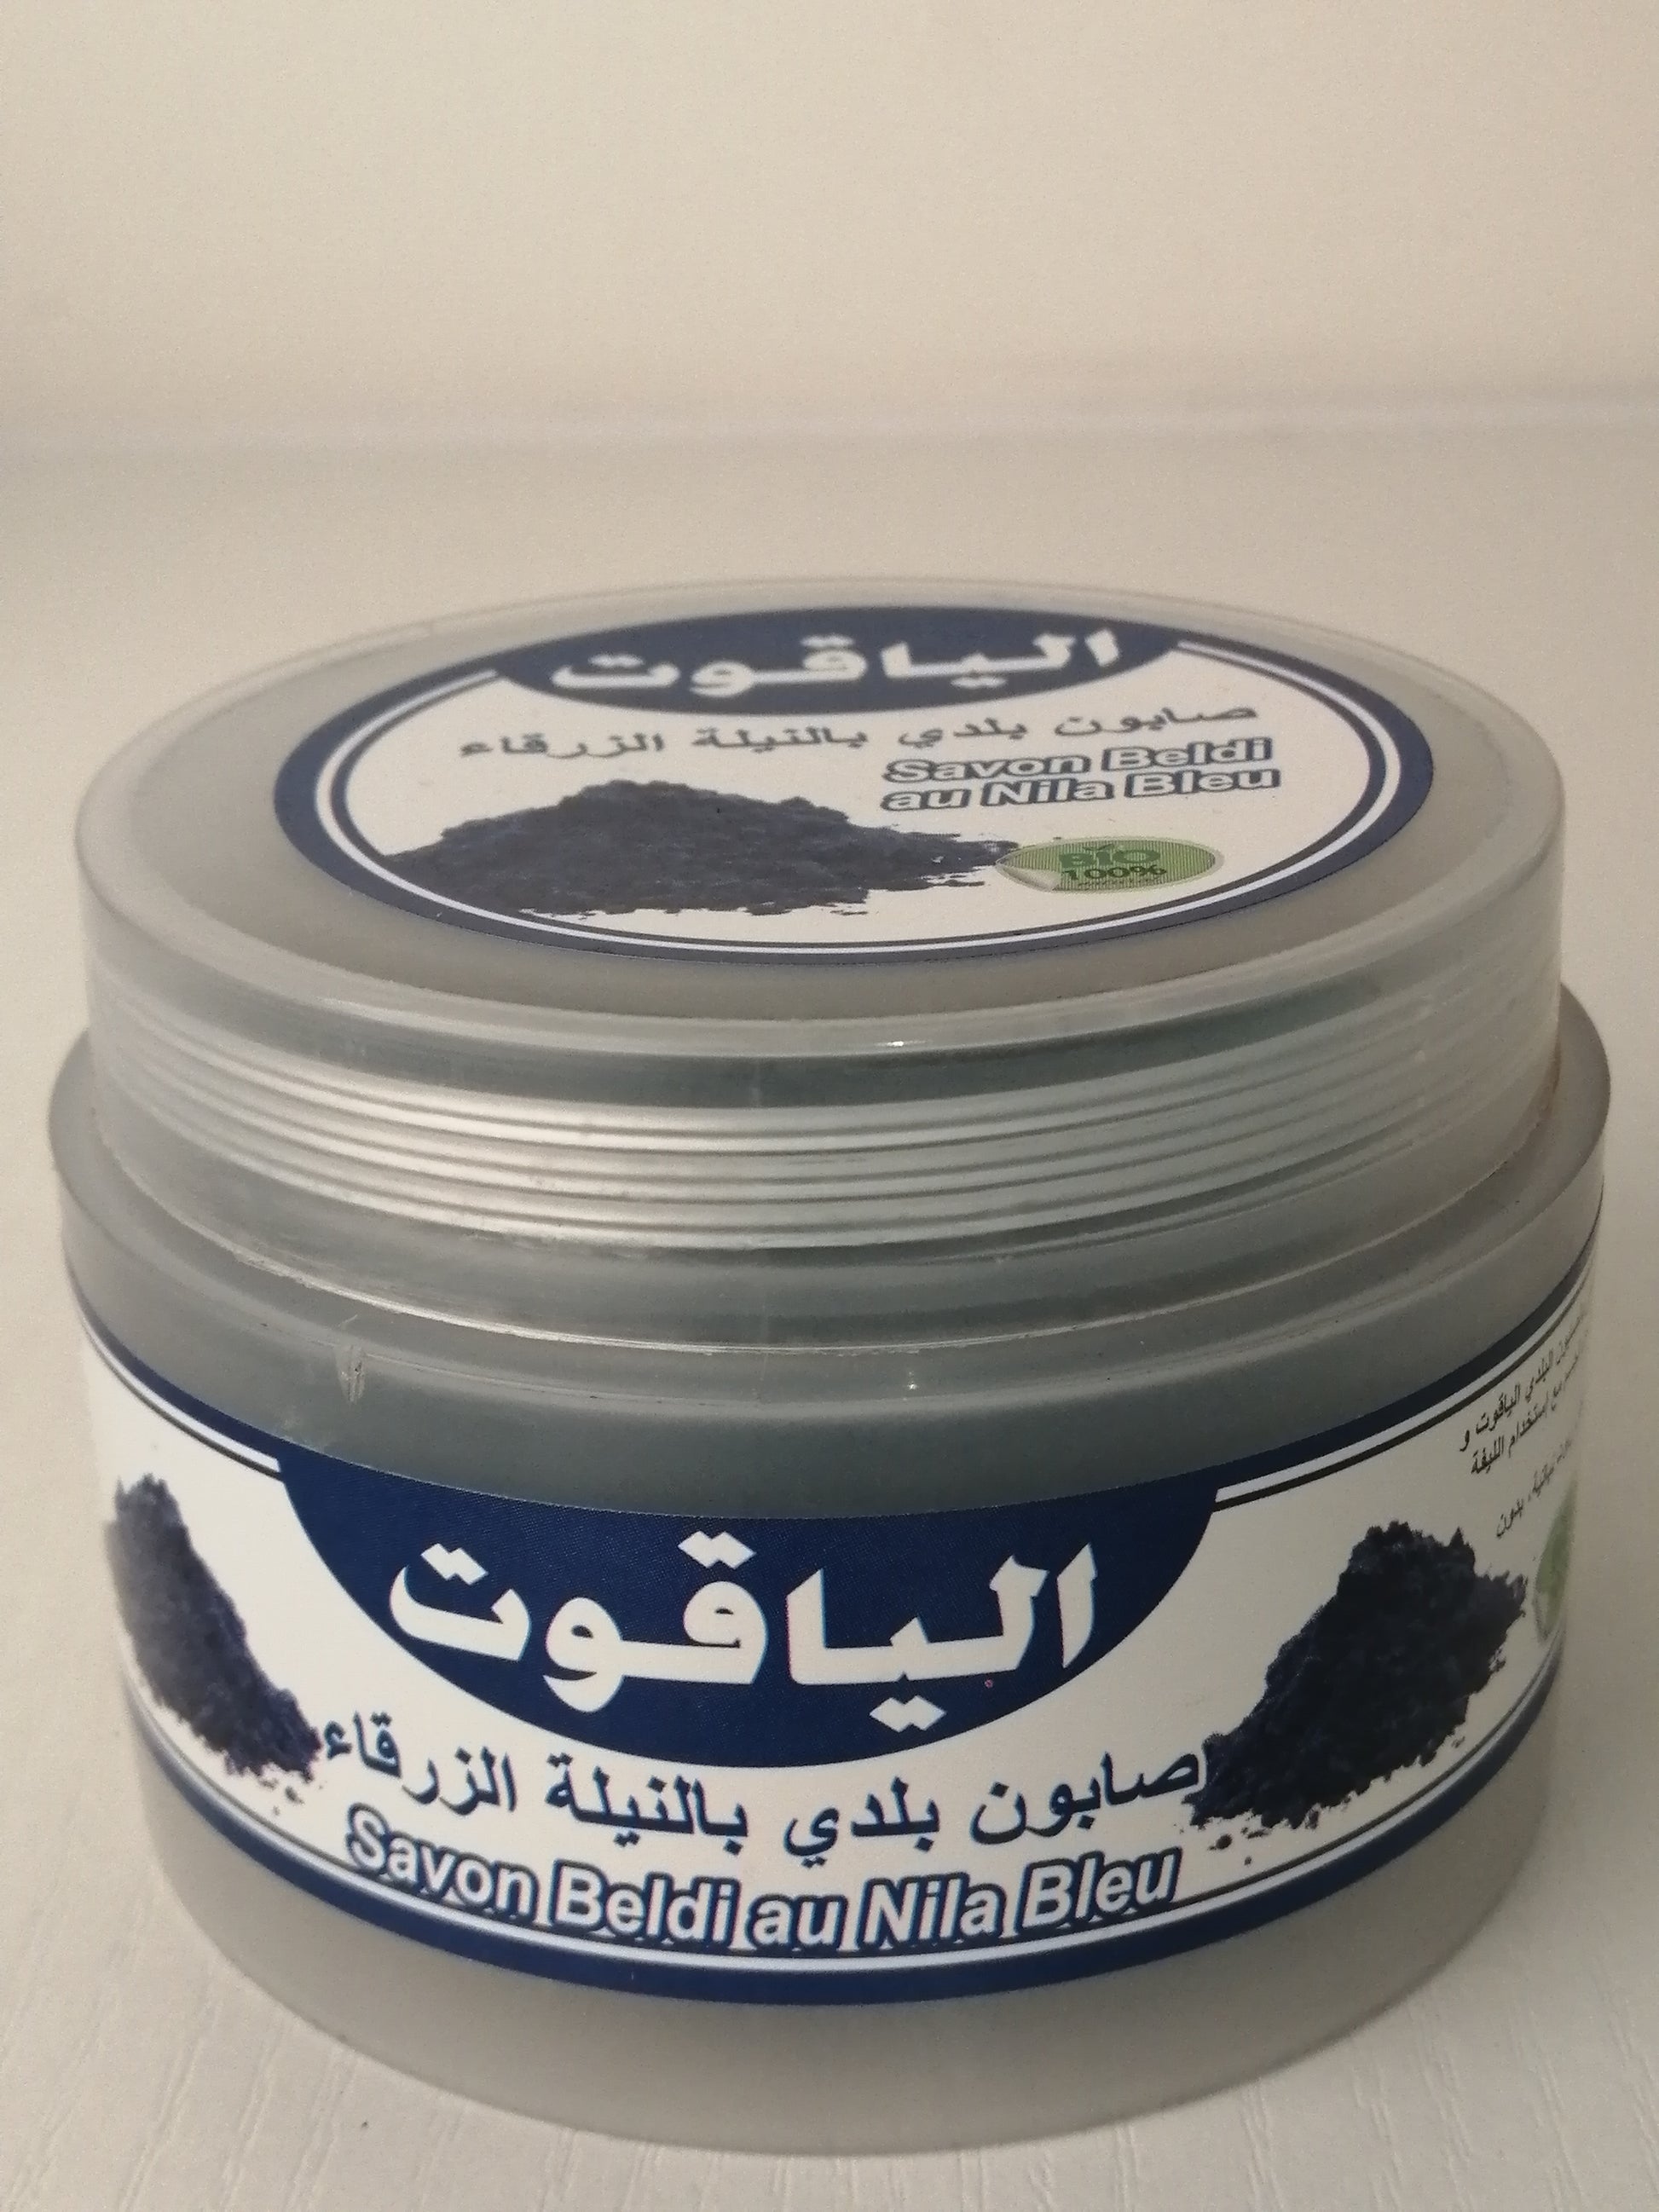 Savon noir Marocain béldi à la poudre de Nila bleu